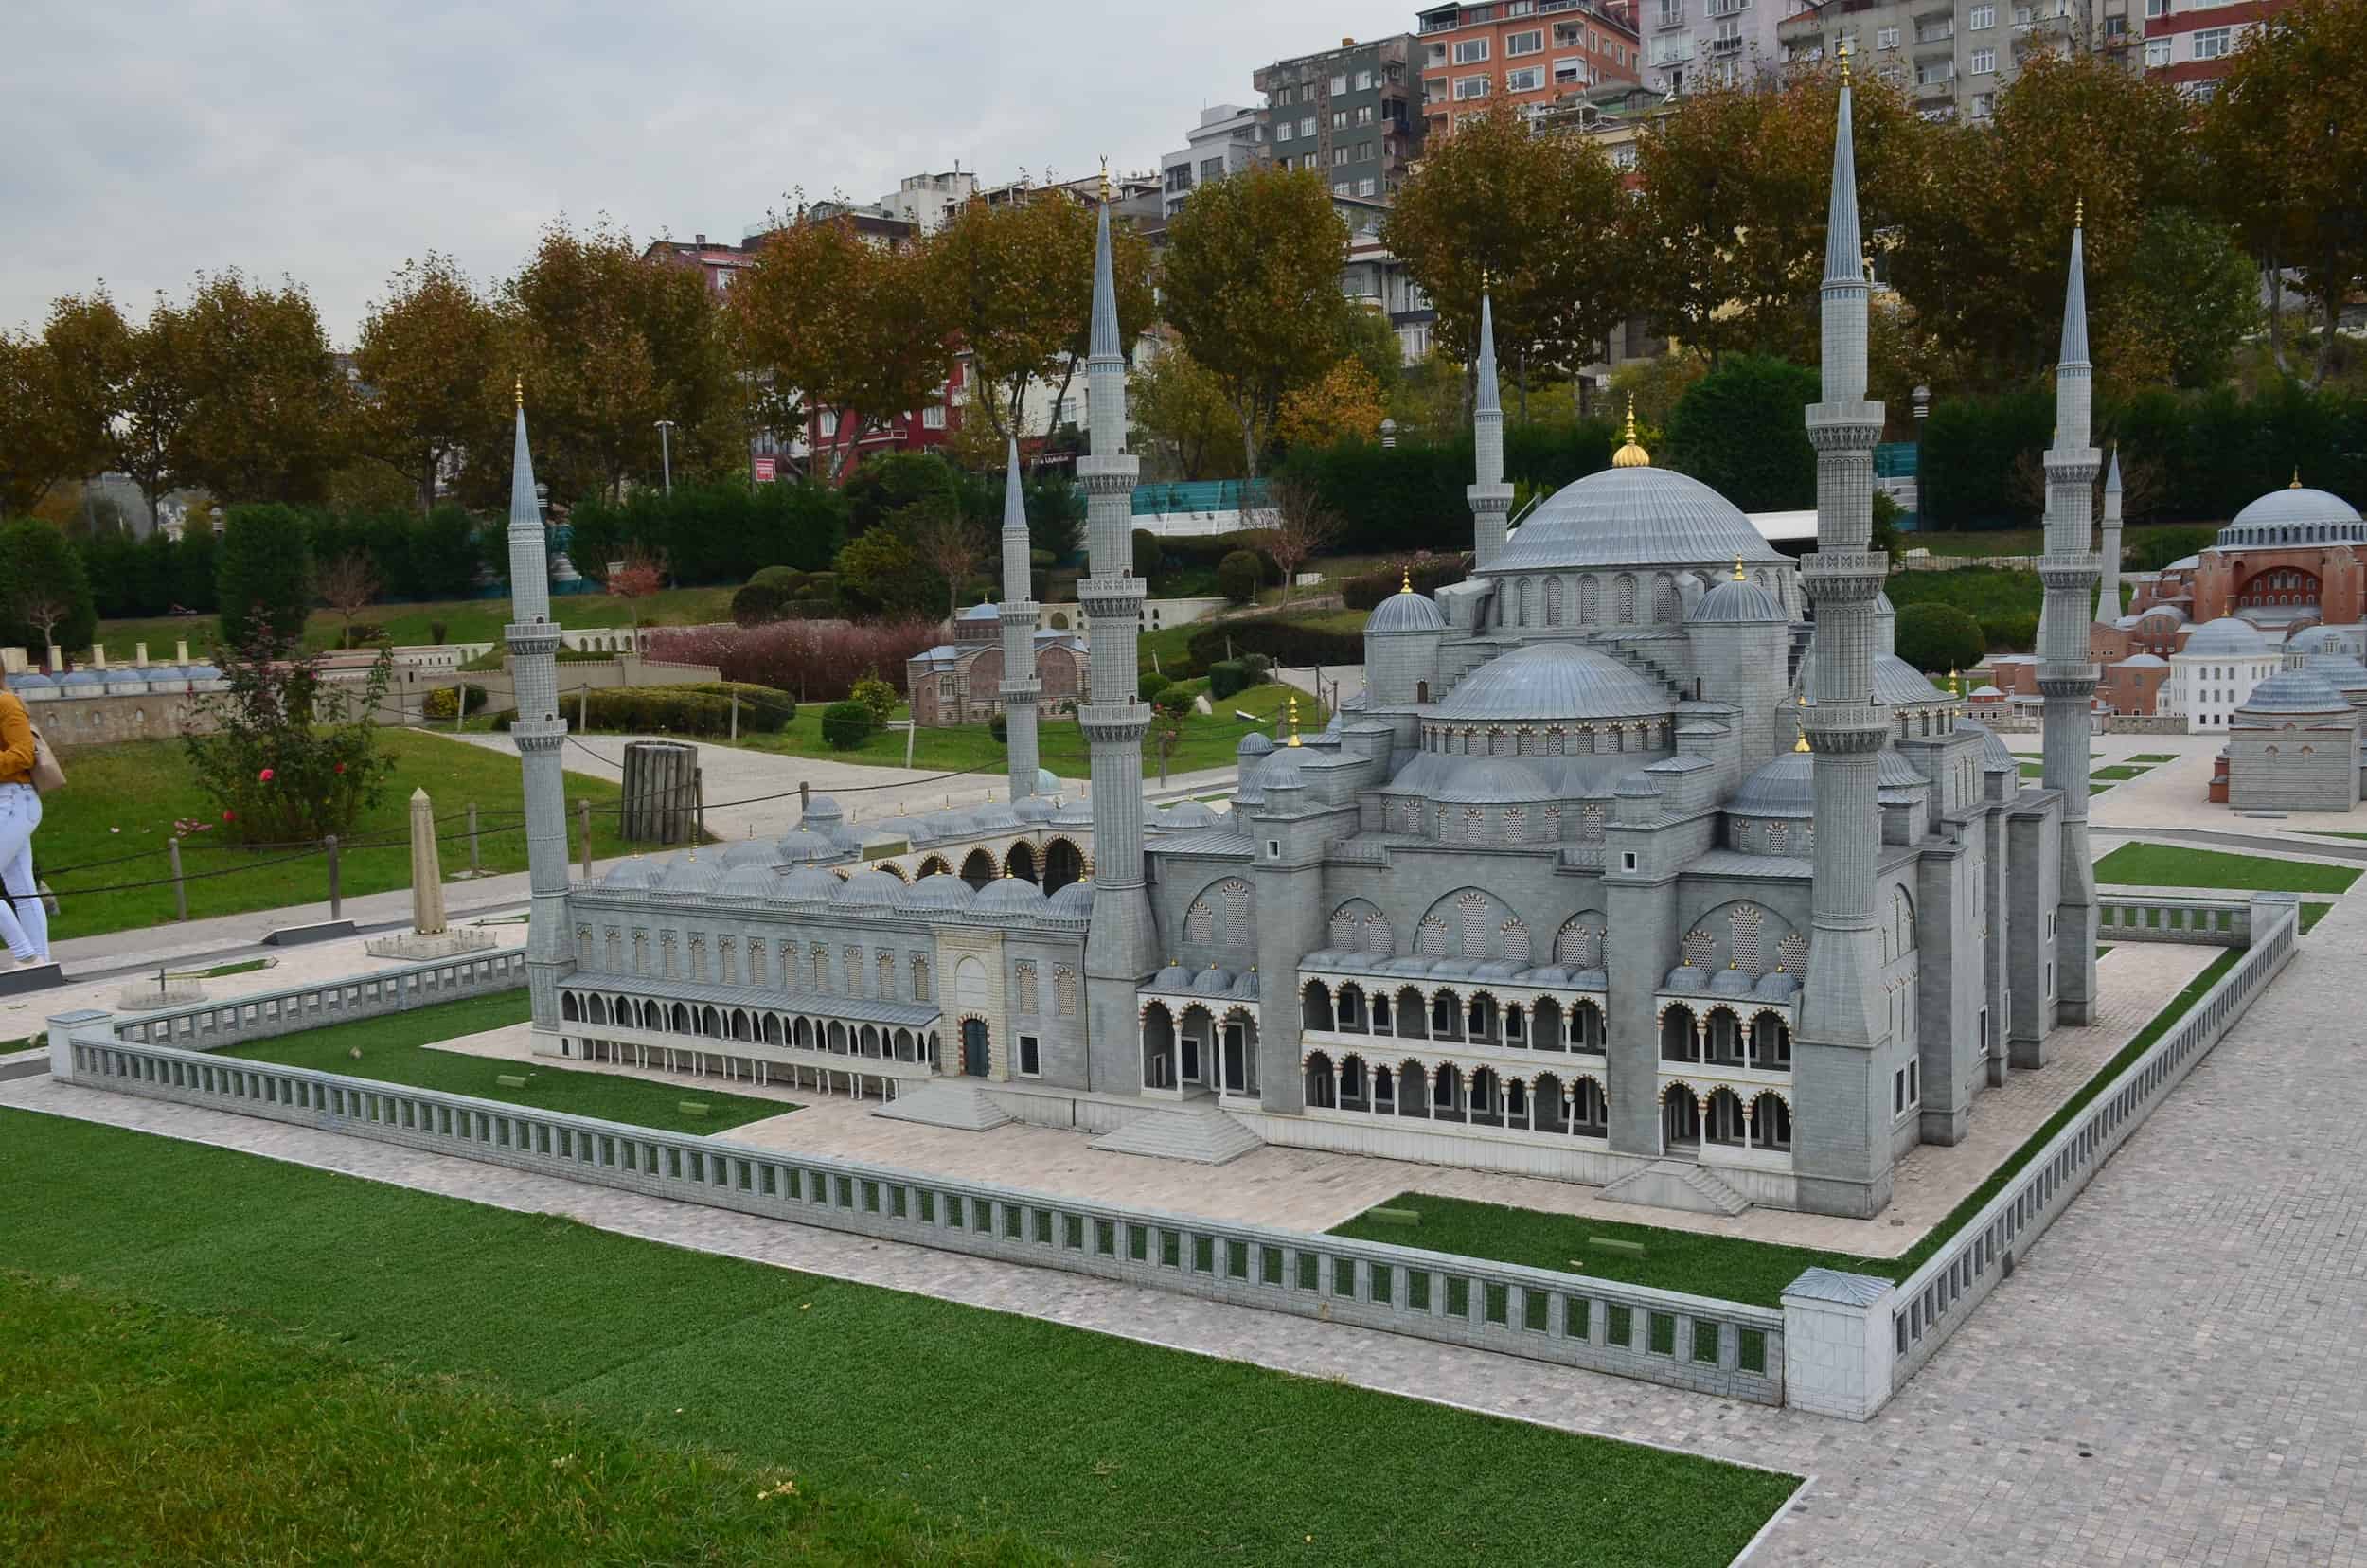 Model of the Blue Mosque, Sultanahmet, 17th century at Miniatürk in Istanbul, Turkey